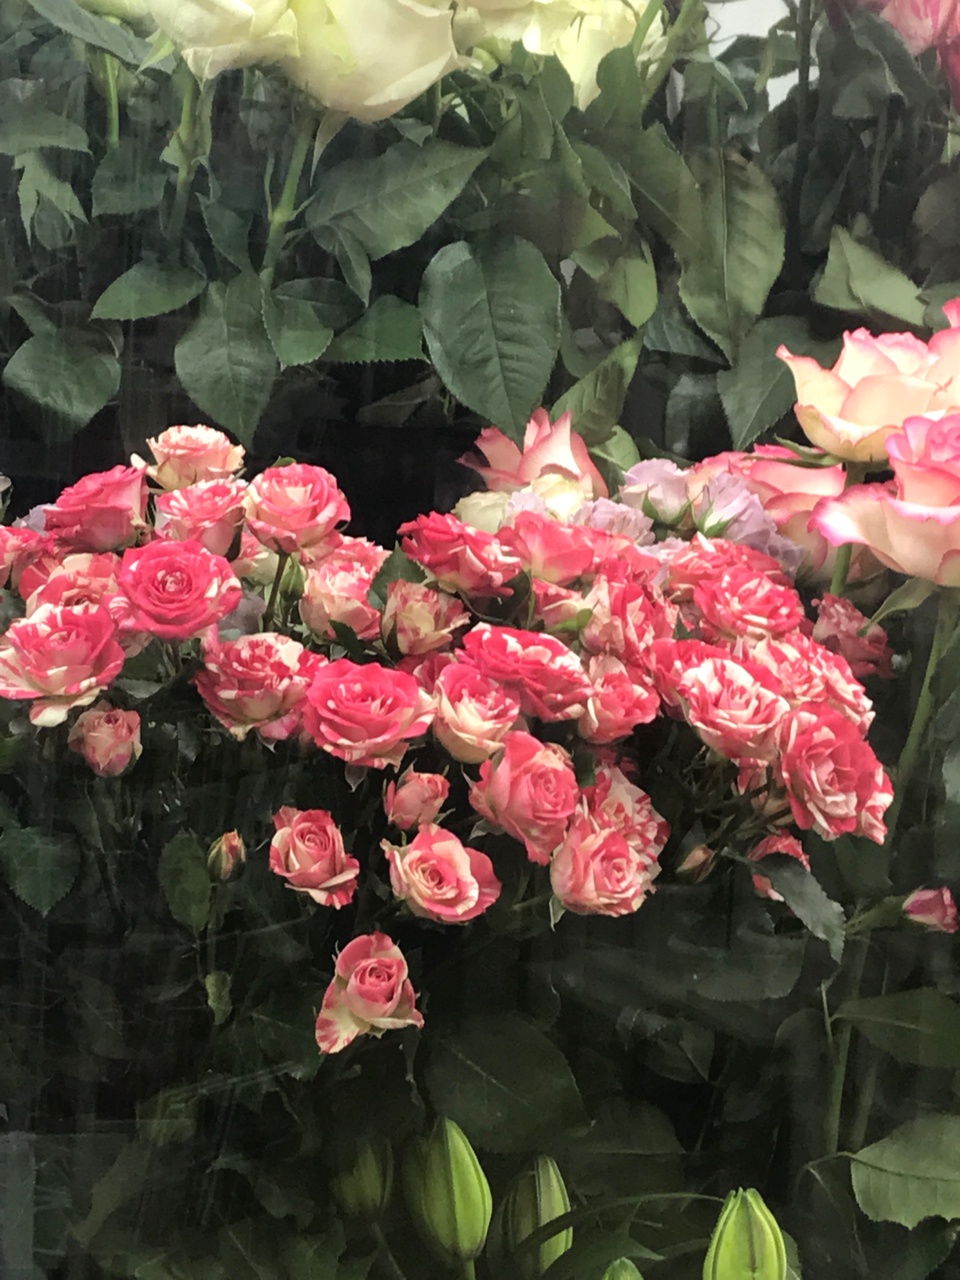 Роза кустовая - 220 ₽, заказать онлайн.